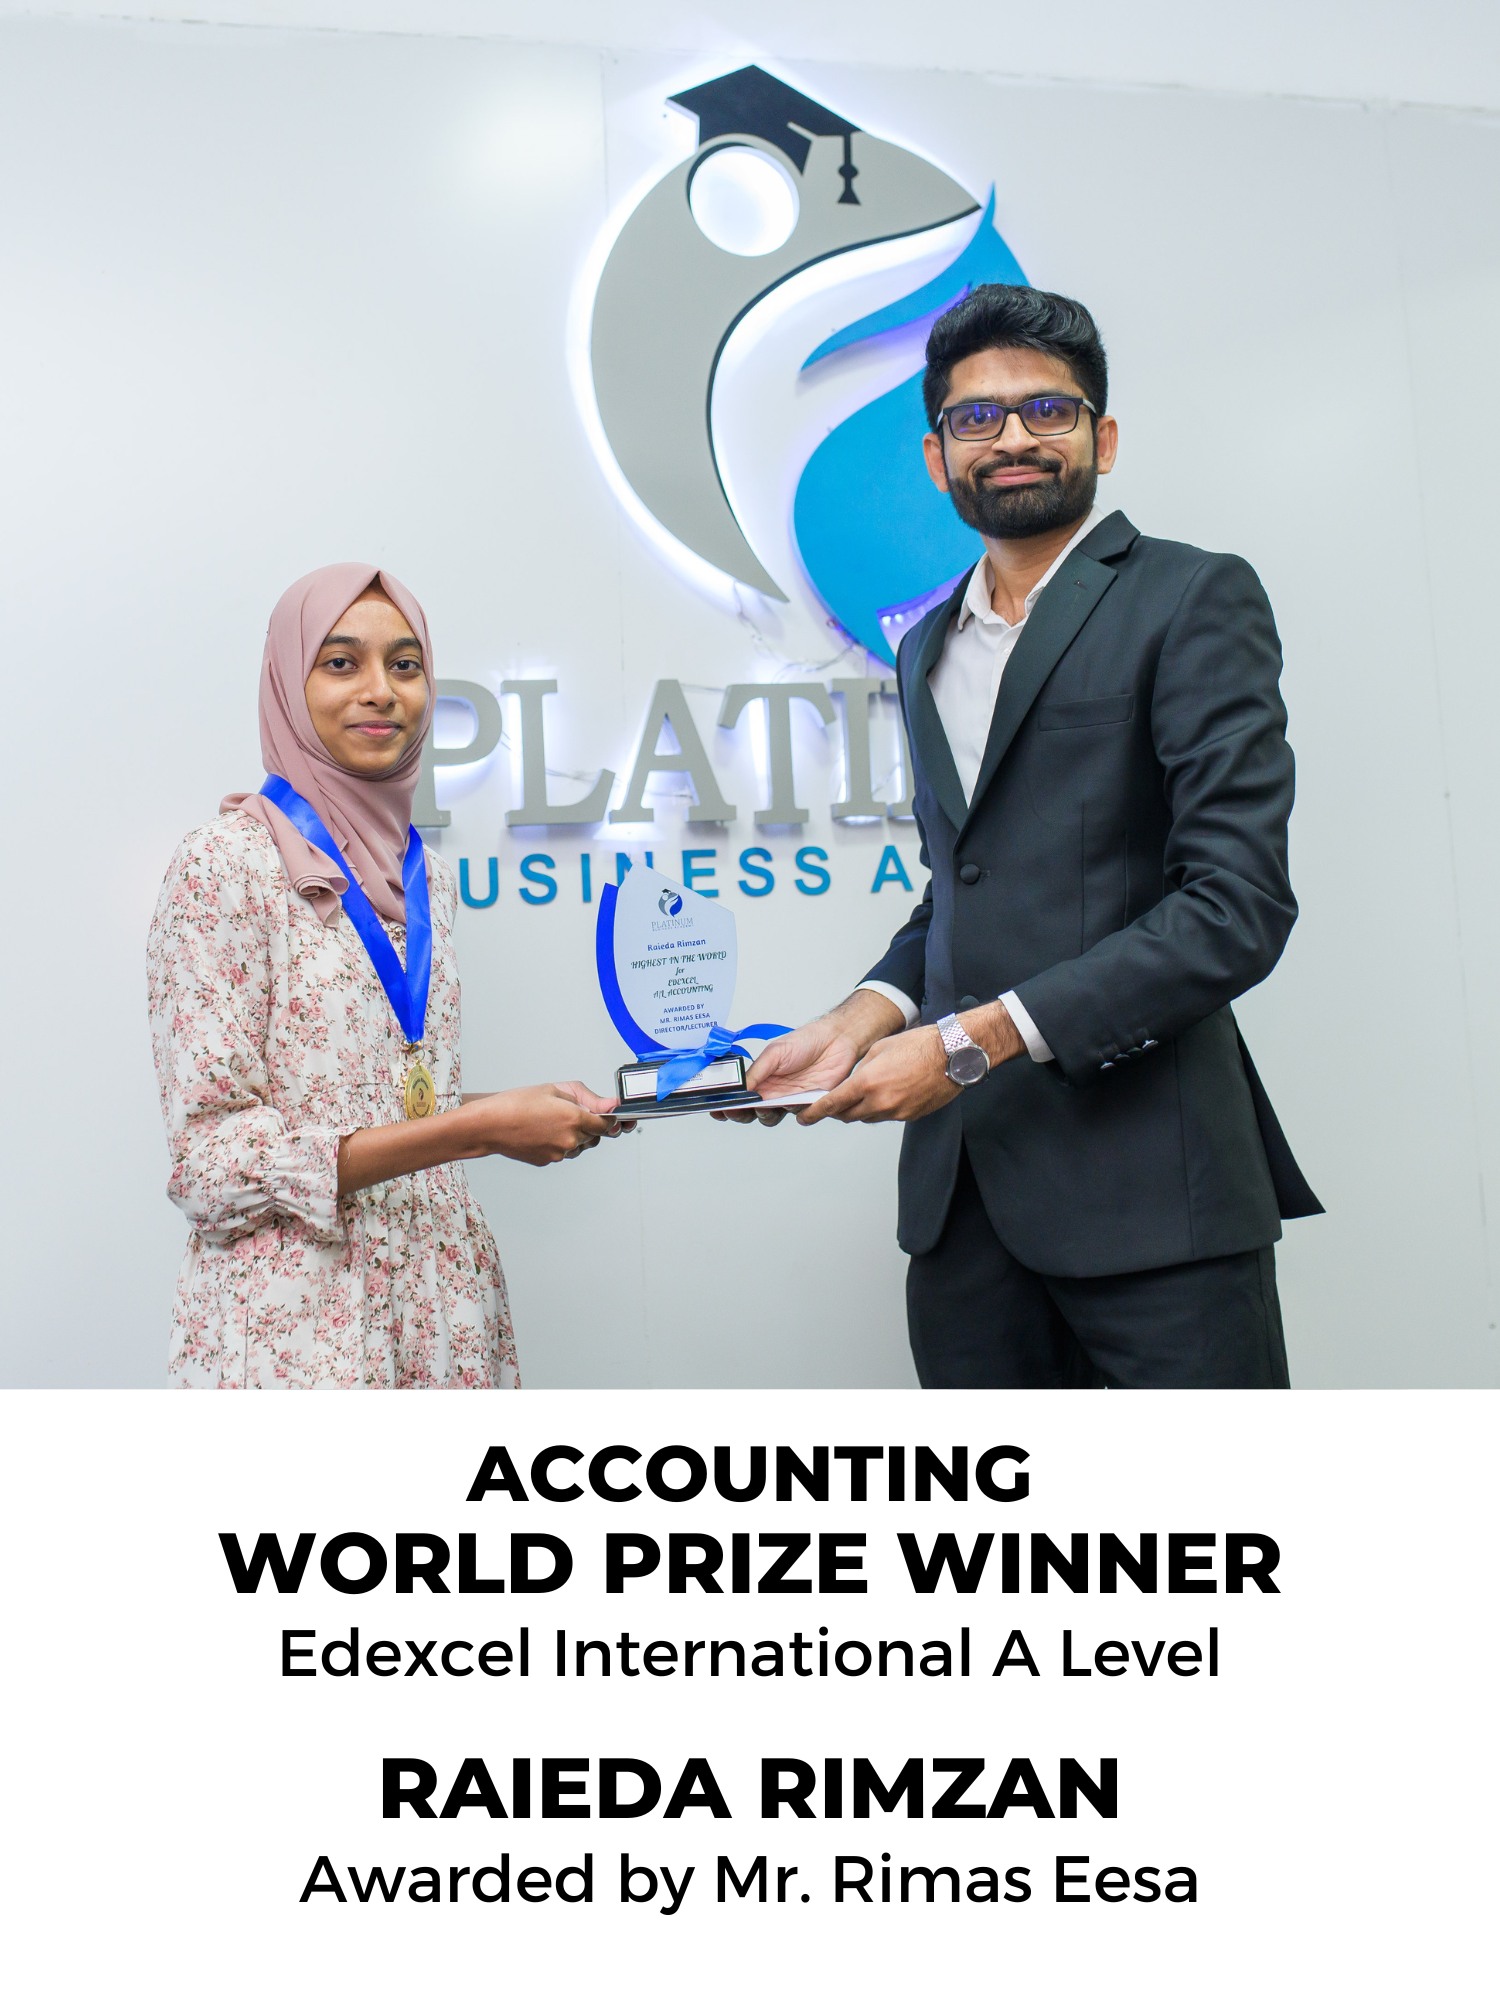 Edexcel A Level Accounting World Prize Winner: Raeida Rimzan
Lecturer: Mr. Rimaz Eesa